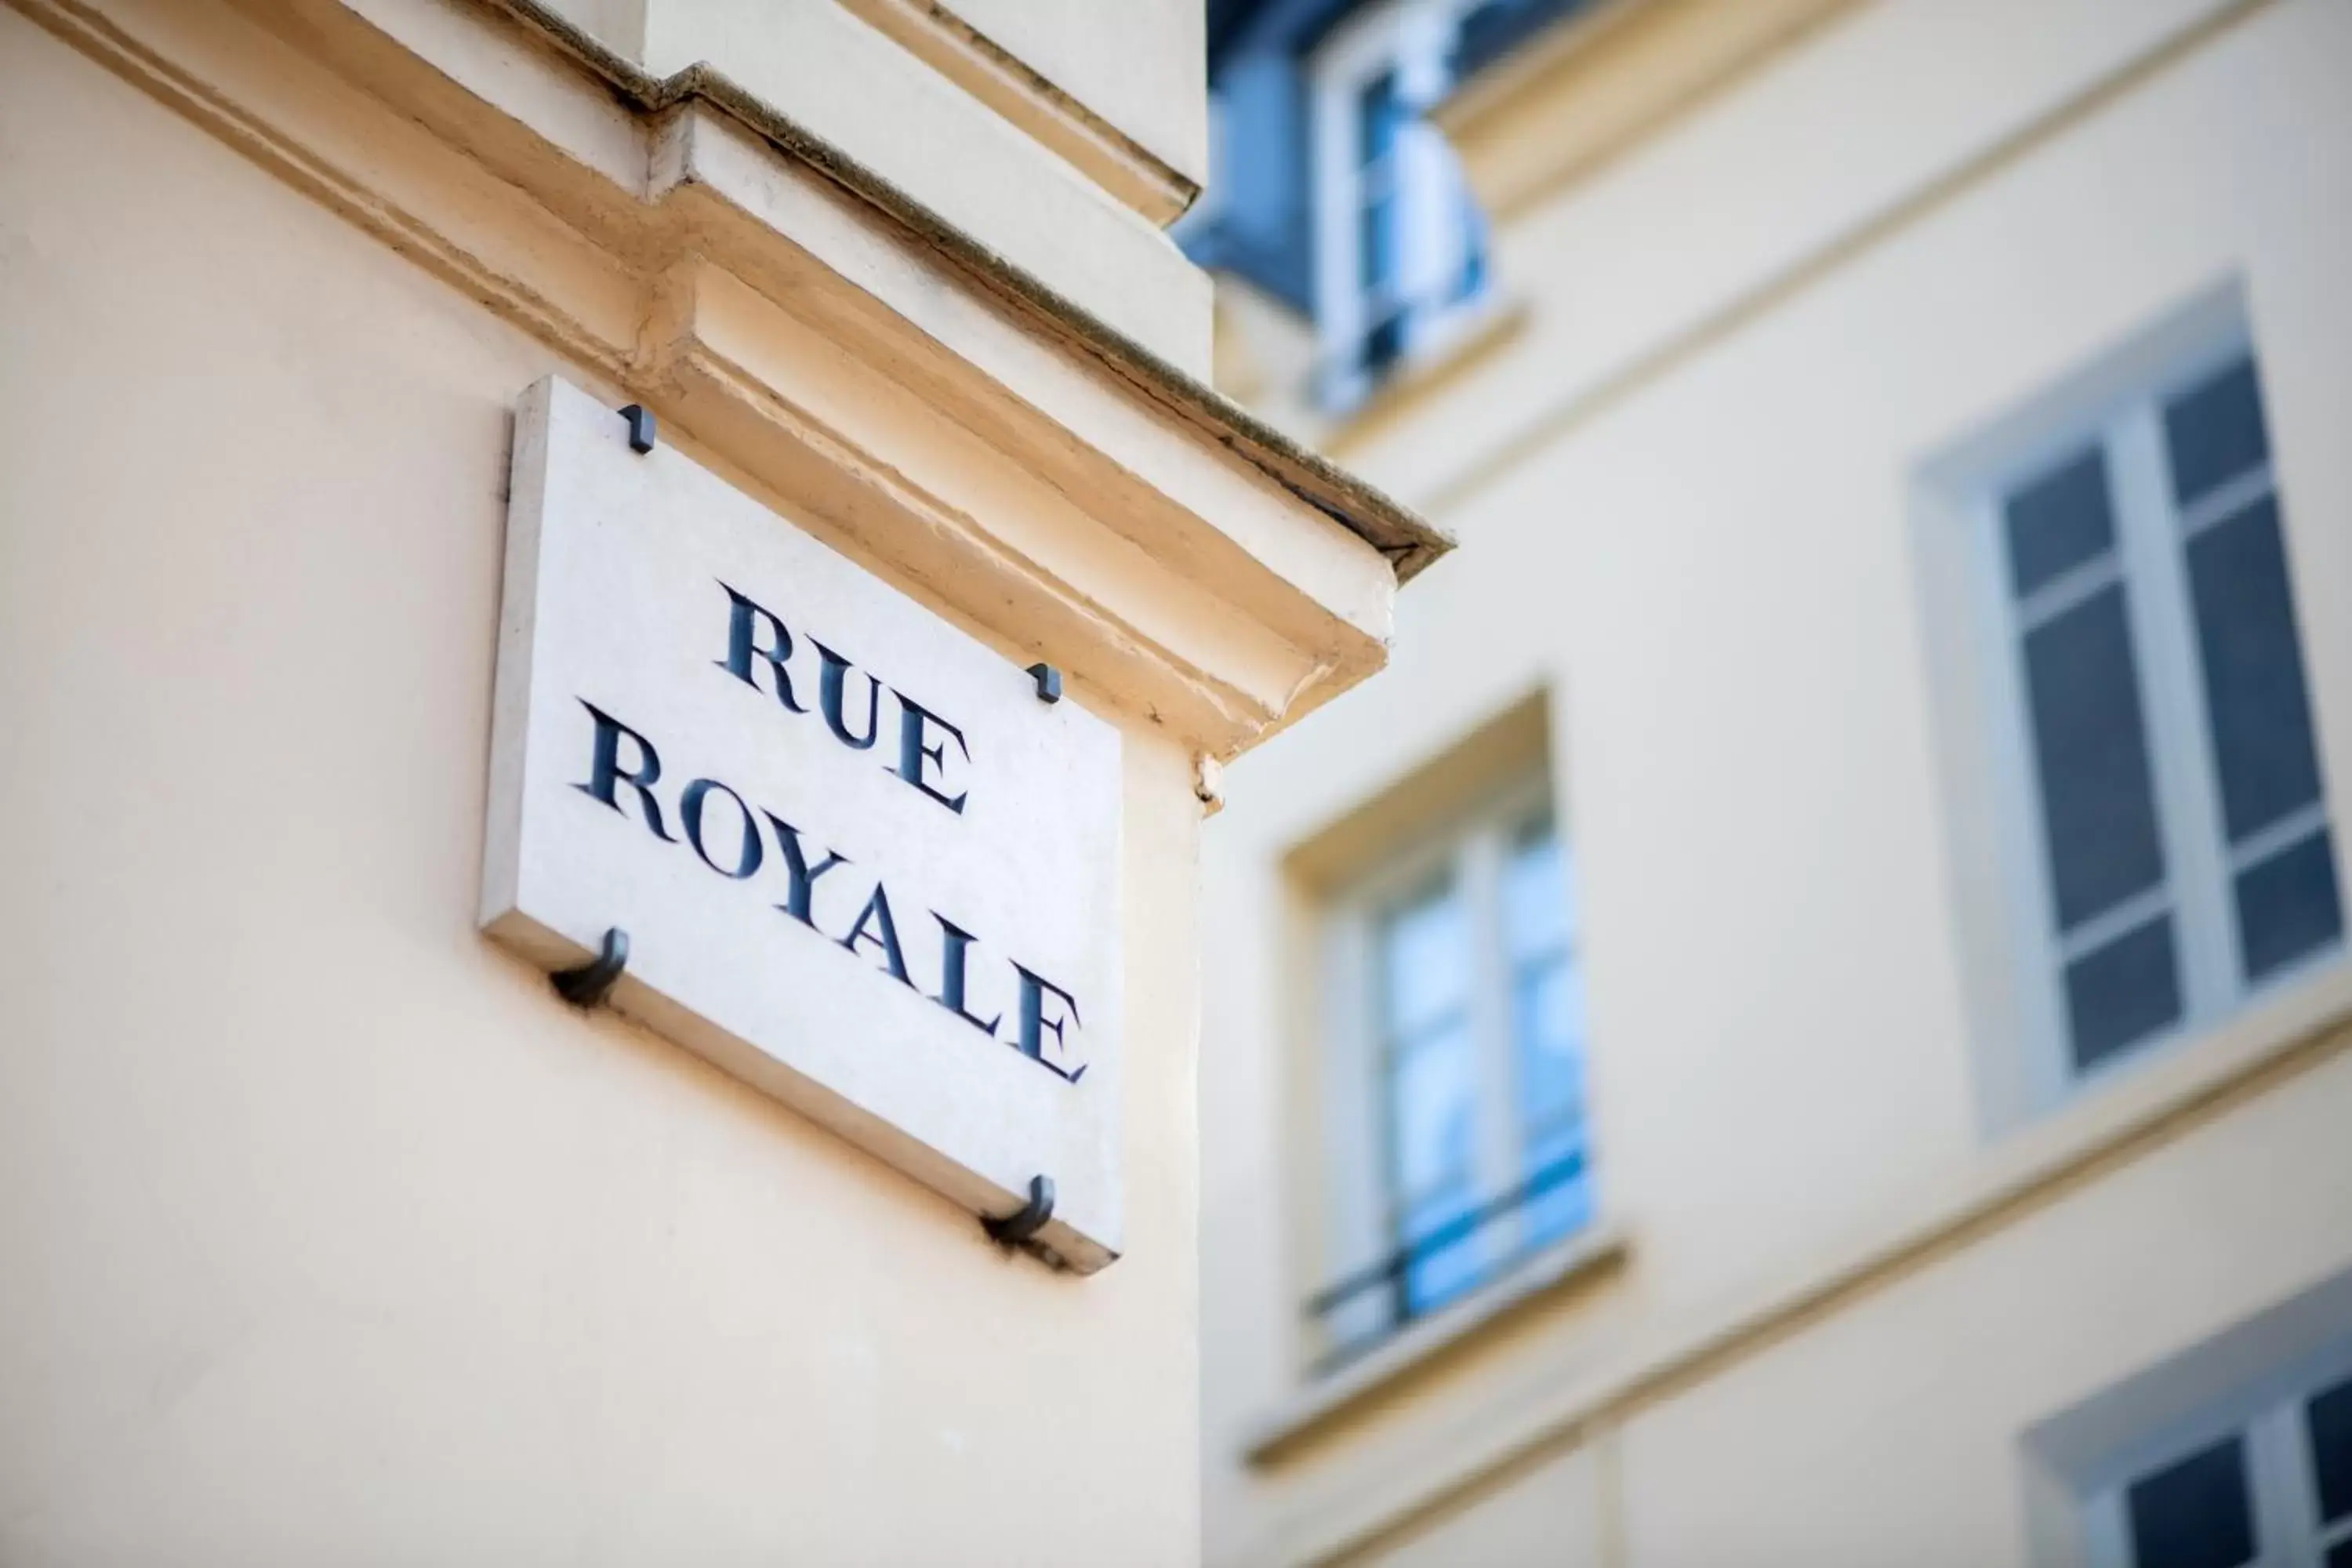 Facade/entrance in Royal Hotel Versailles